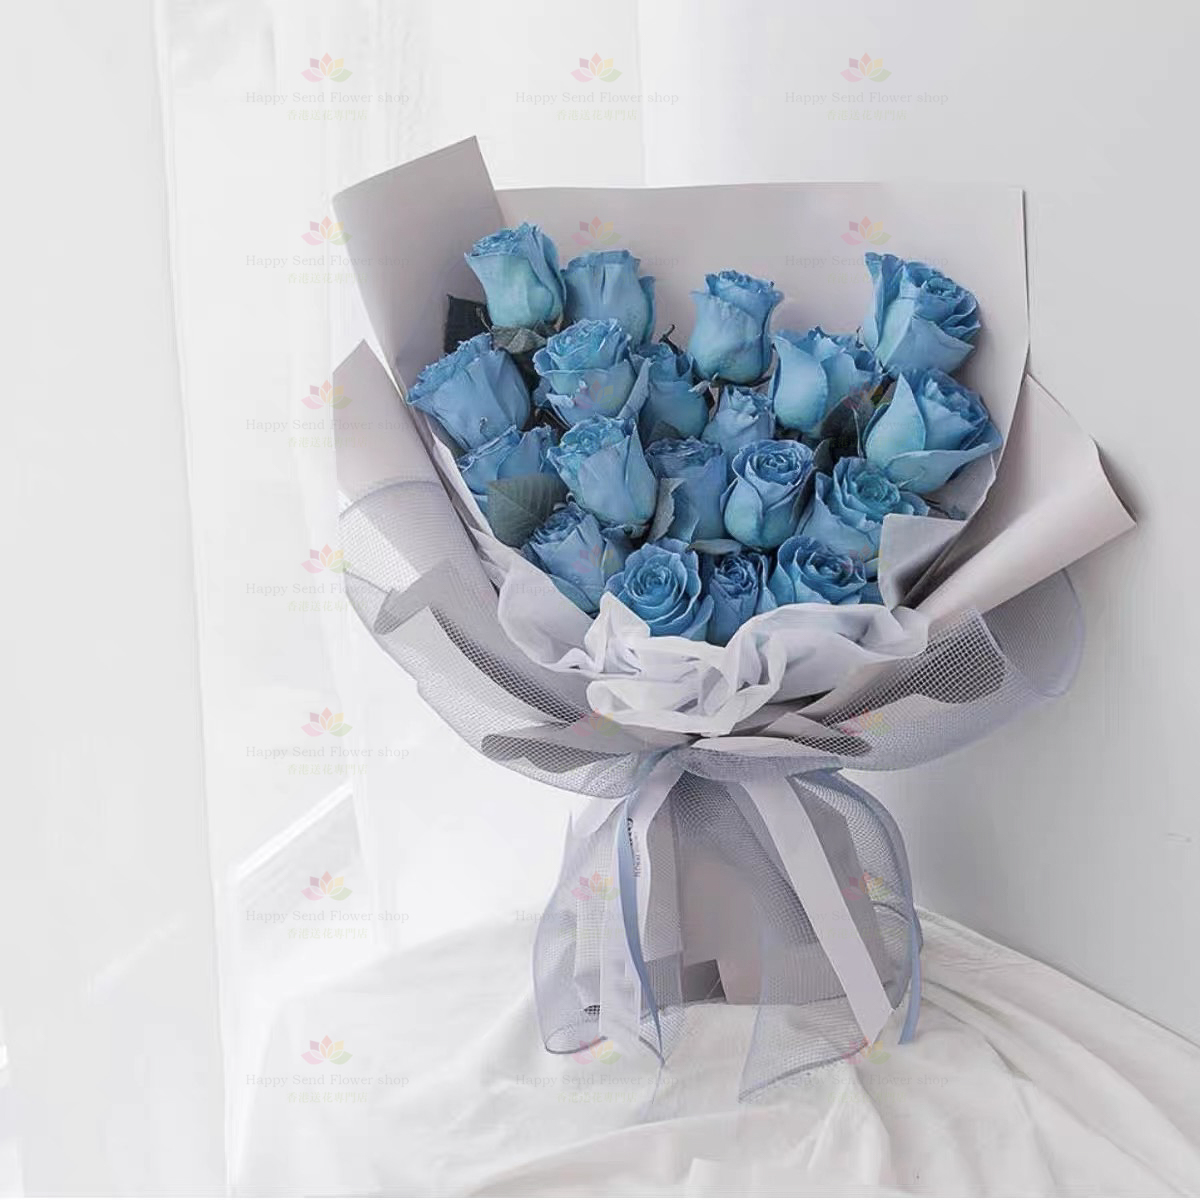 Snow Queen (19 blue roses)